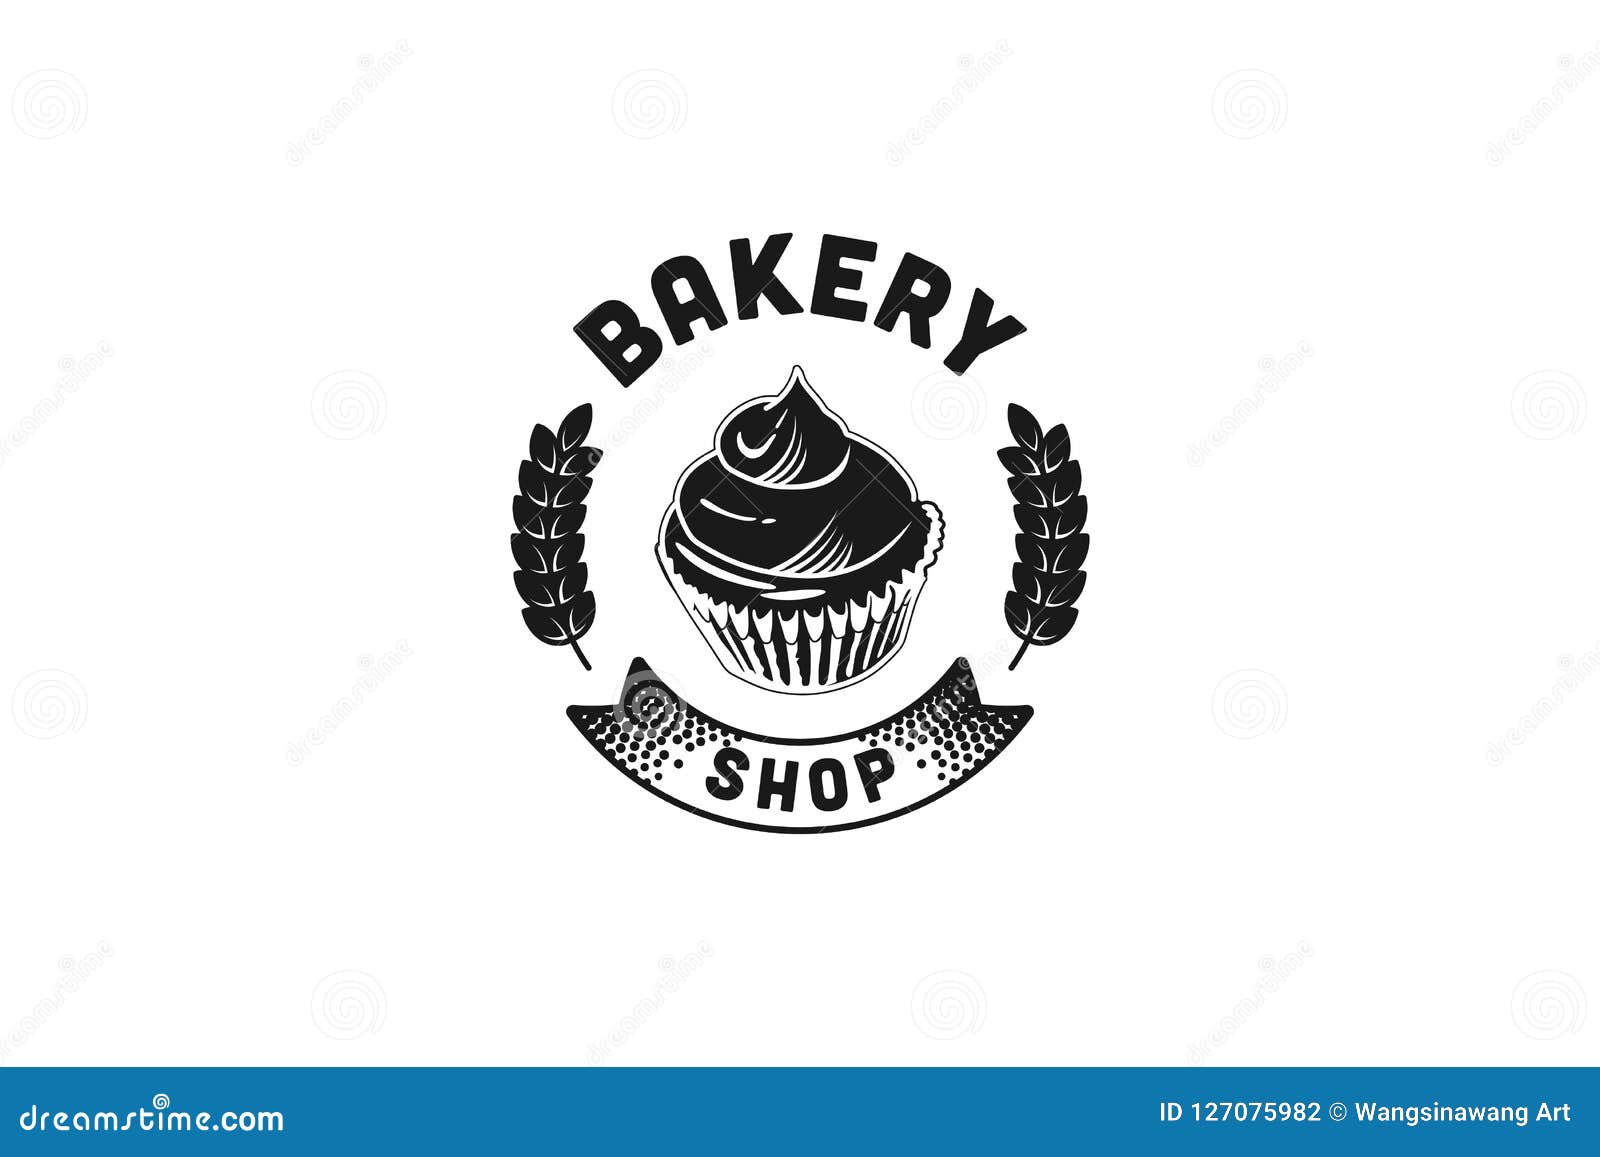 Cake bakery logo design inspiration Royalty Free Vector